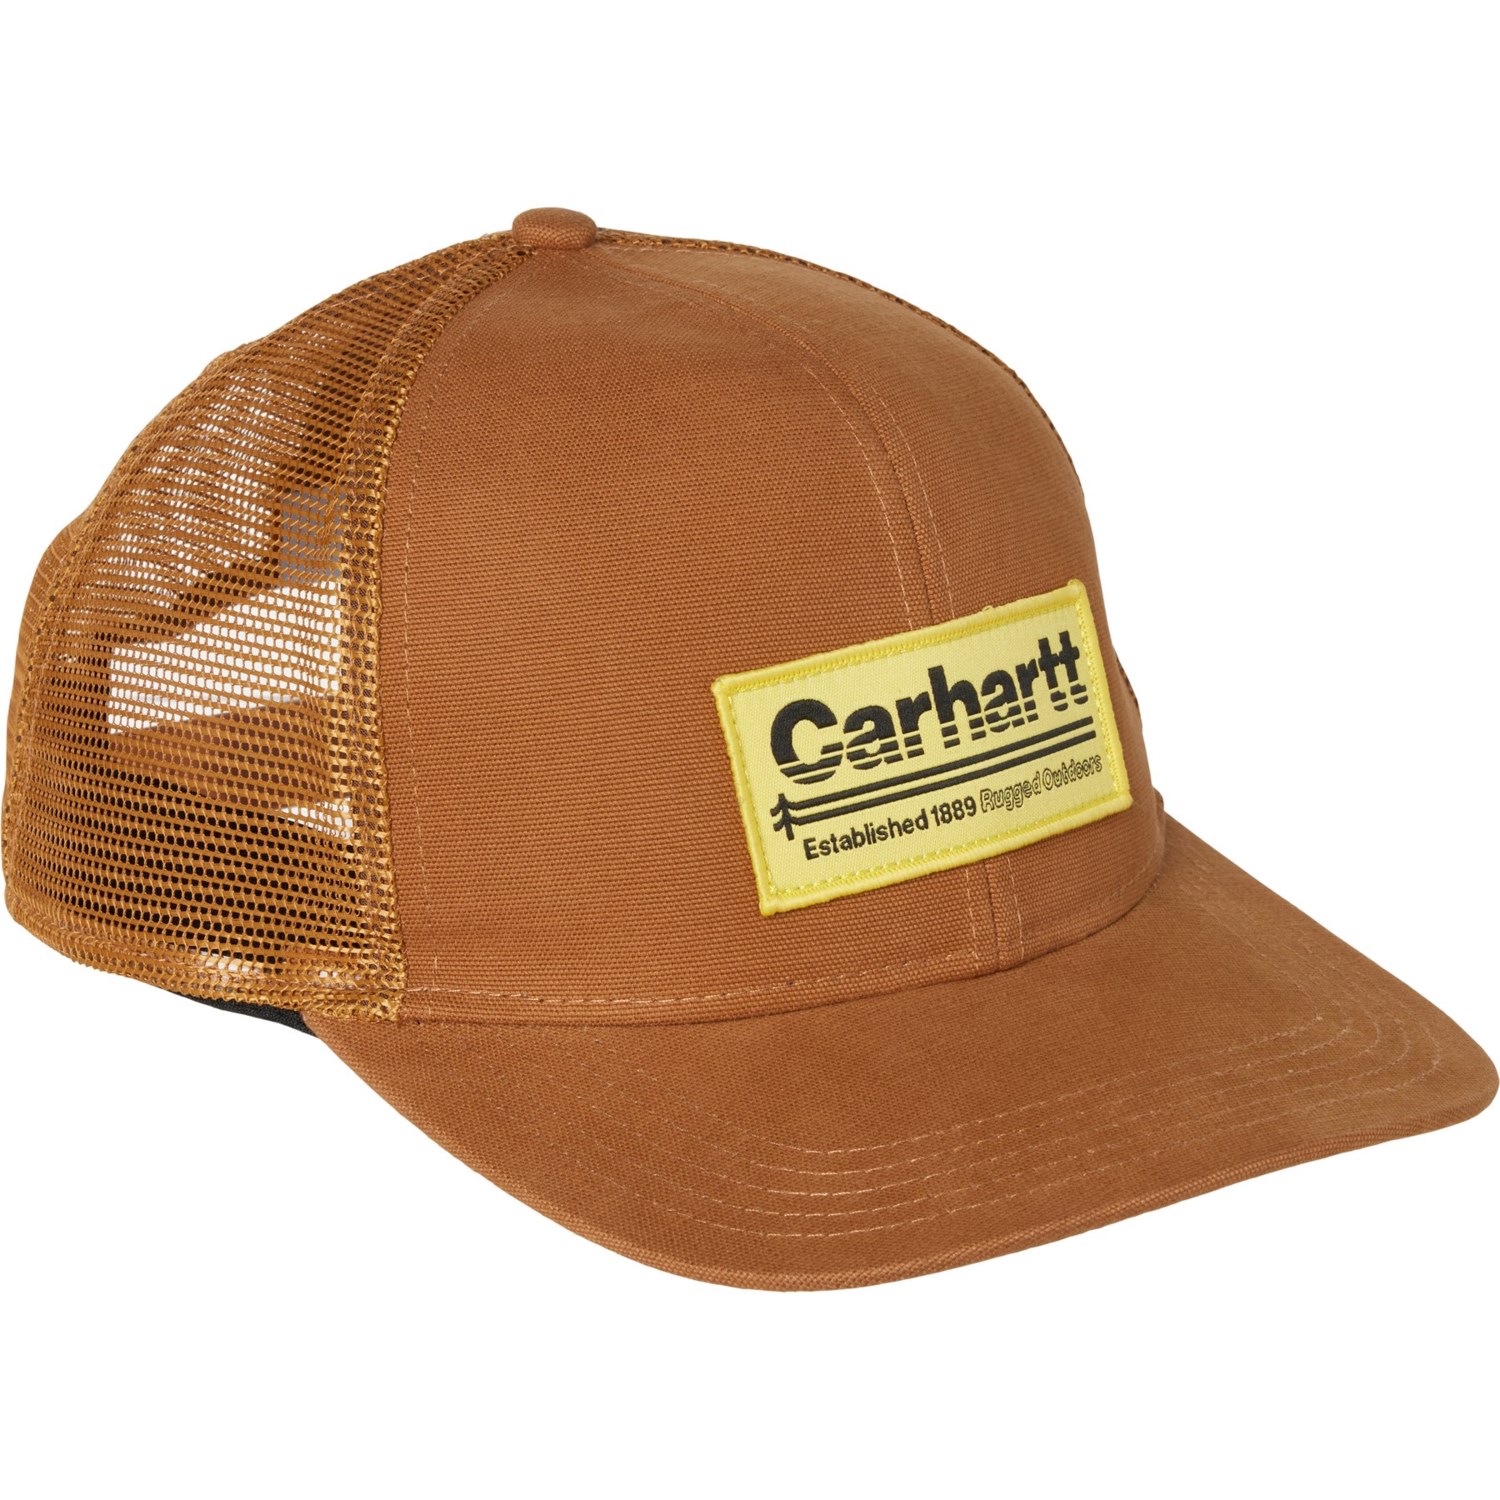 Carhartt Fish Hats for Men